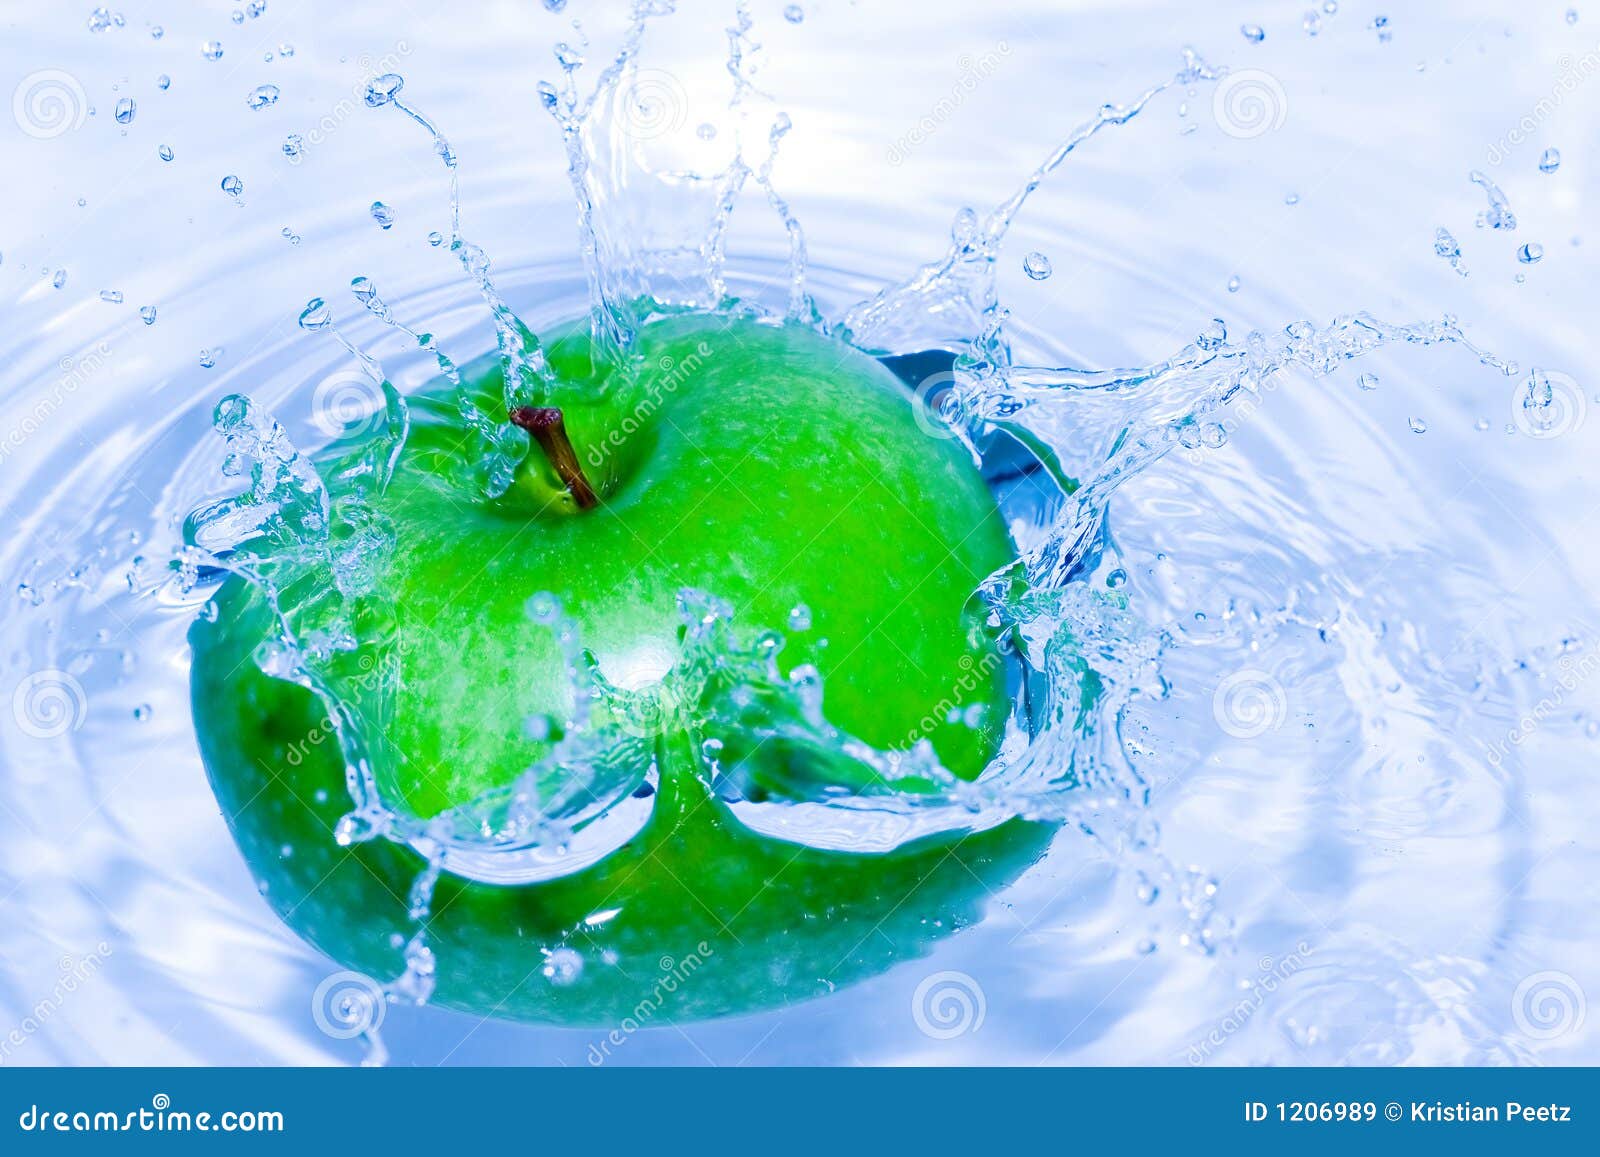 Splash-serie: green apple stock image. Image of splash - 1206989